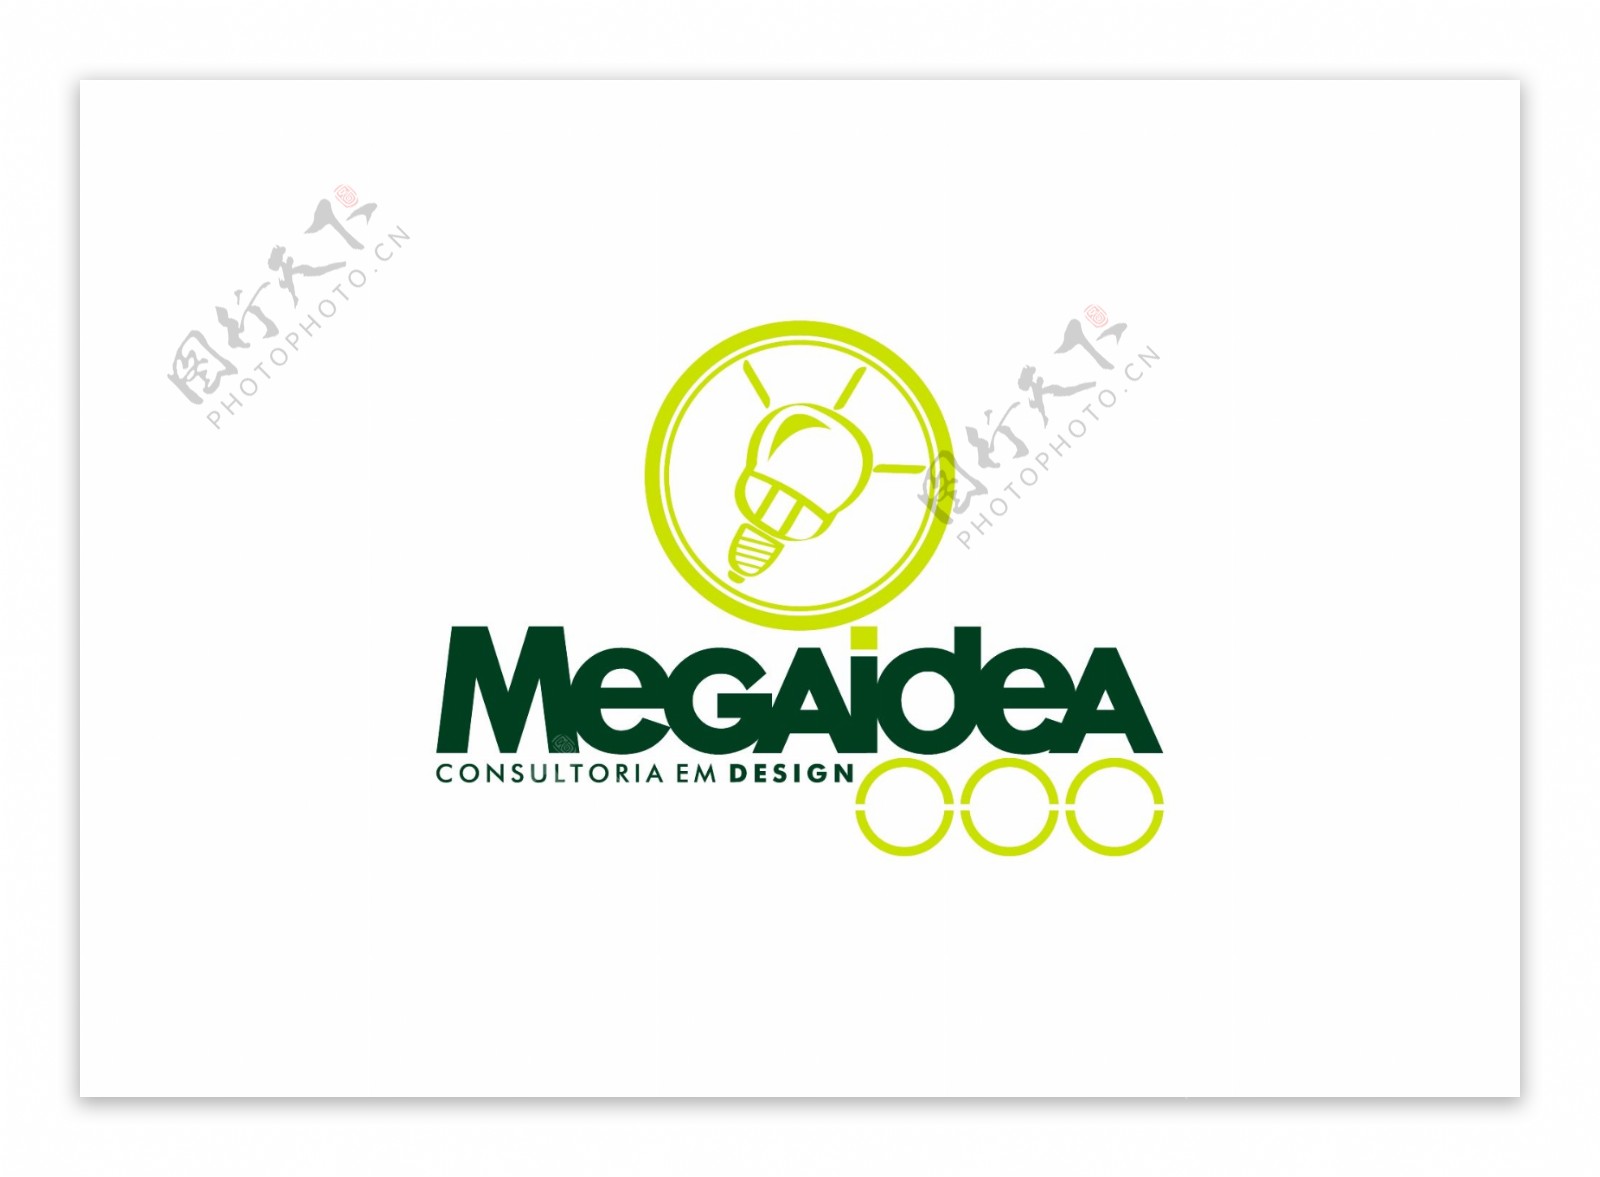 MegaideaConsultoriaemDesignlogo设计欣赏MegaideaConsultoriaemDesign广告标志下载标志设计欣赏